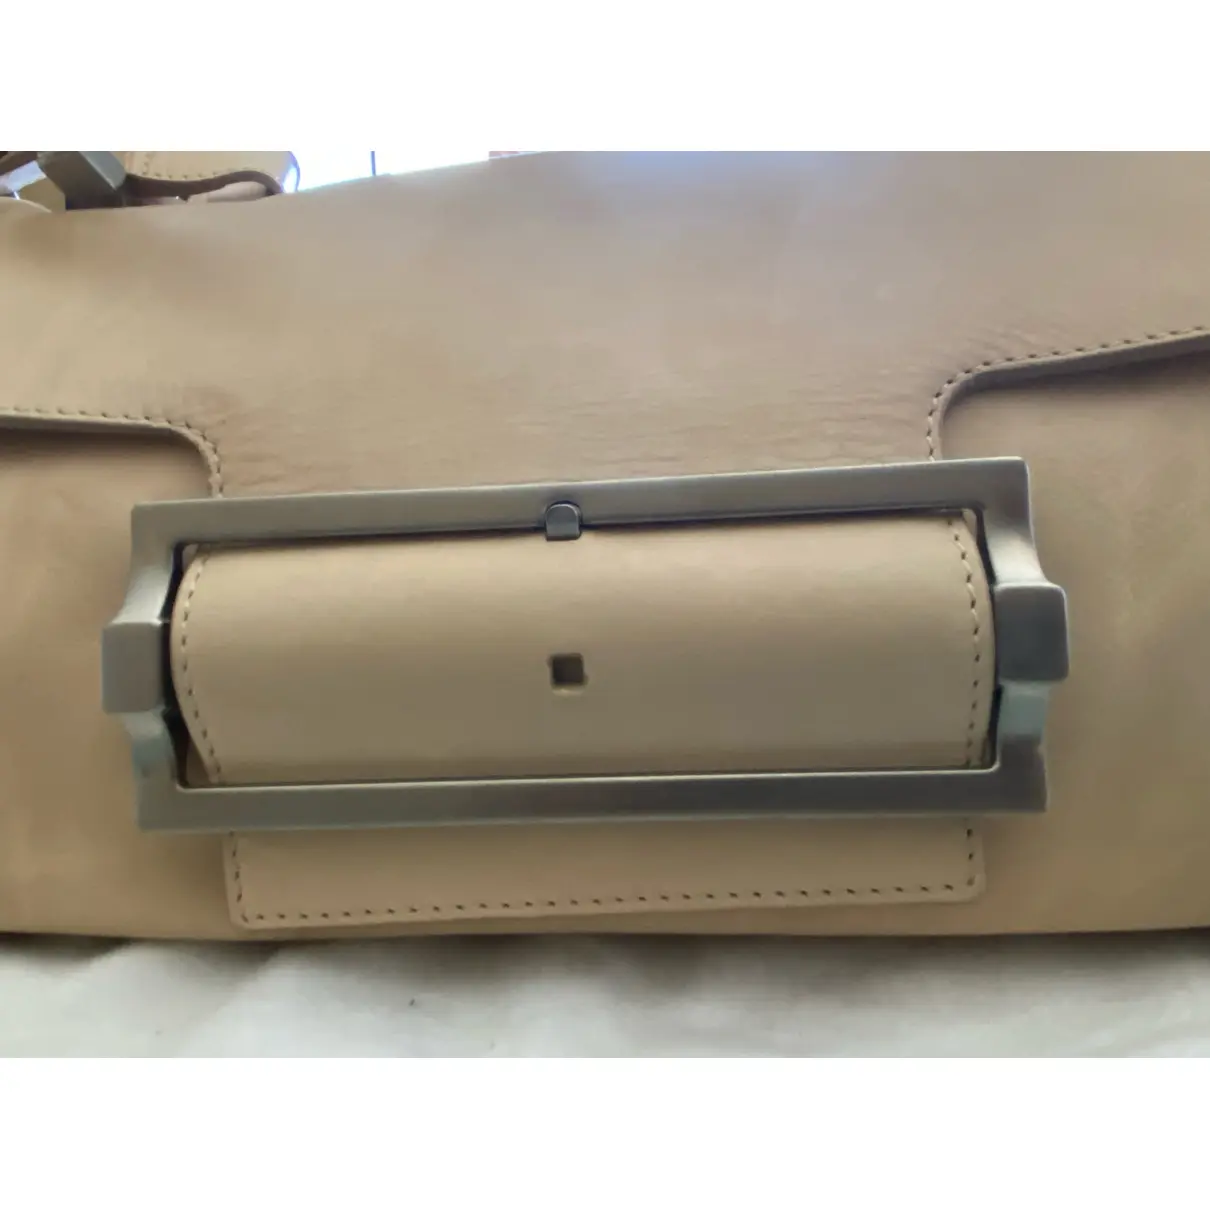 Leather handbag Givenchy - Vintage